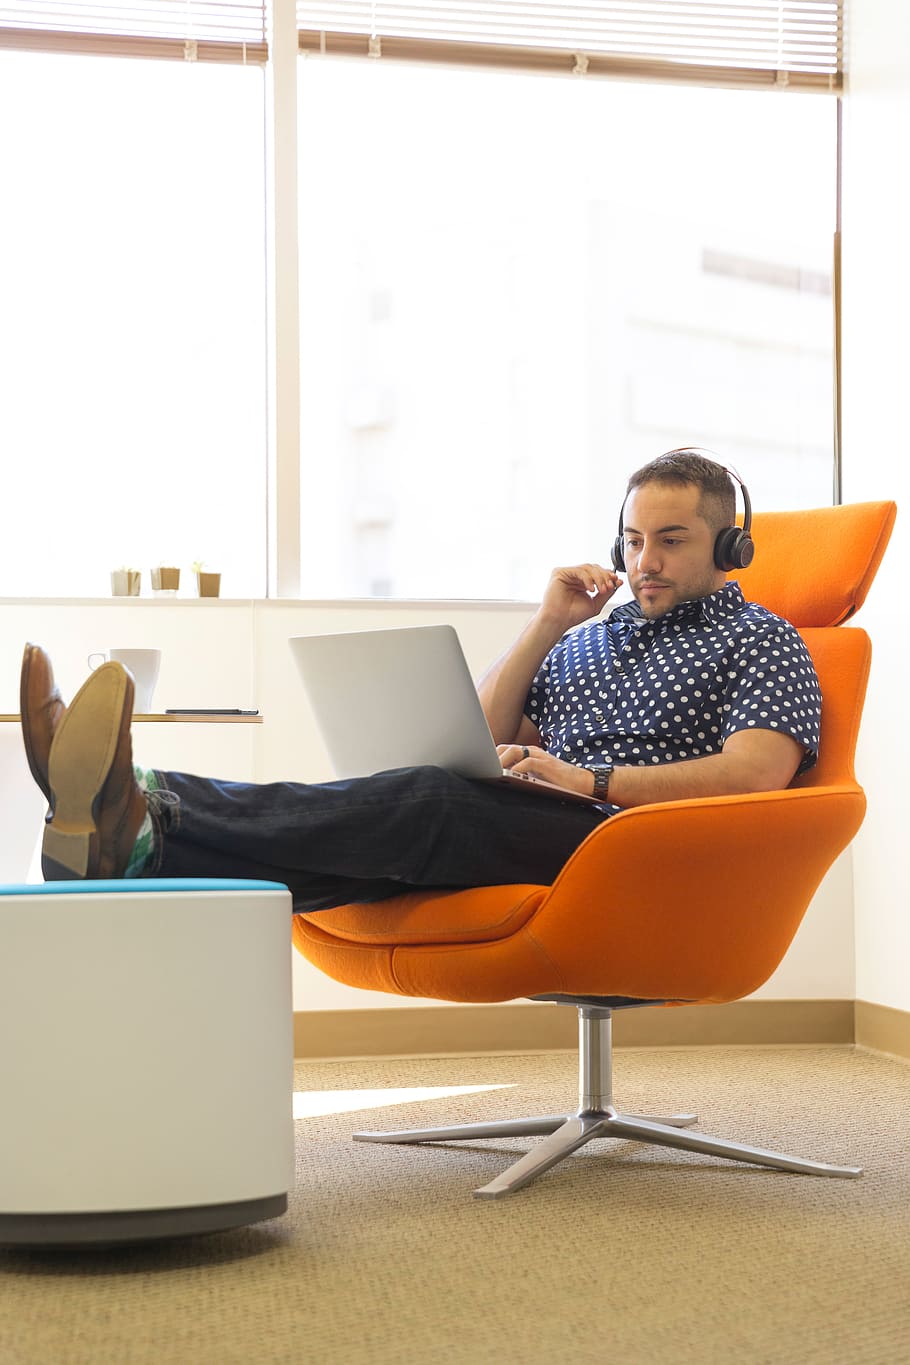 Man Wearing Headphones Sitting on Orange Padded Chair While Using Laptop Computer, HD wallpaper